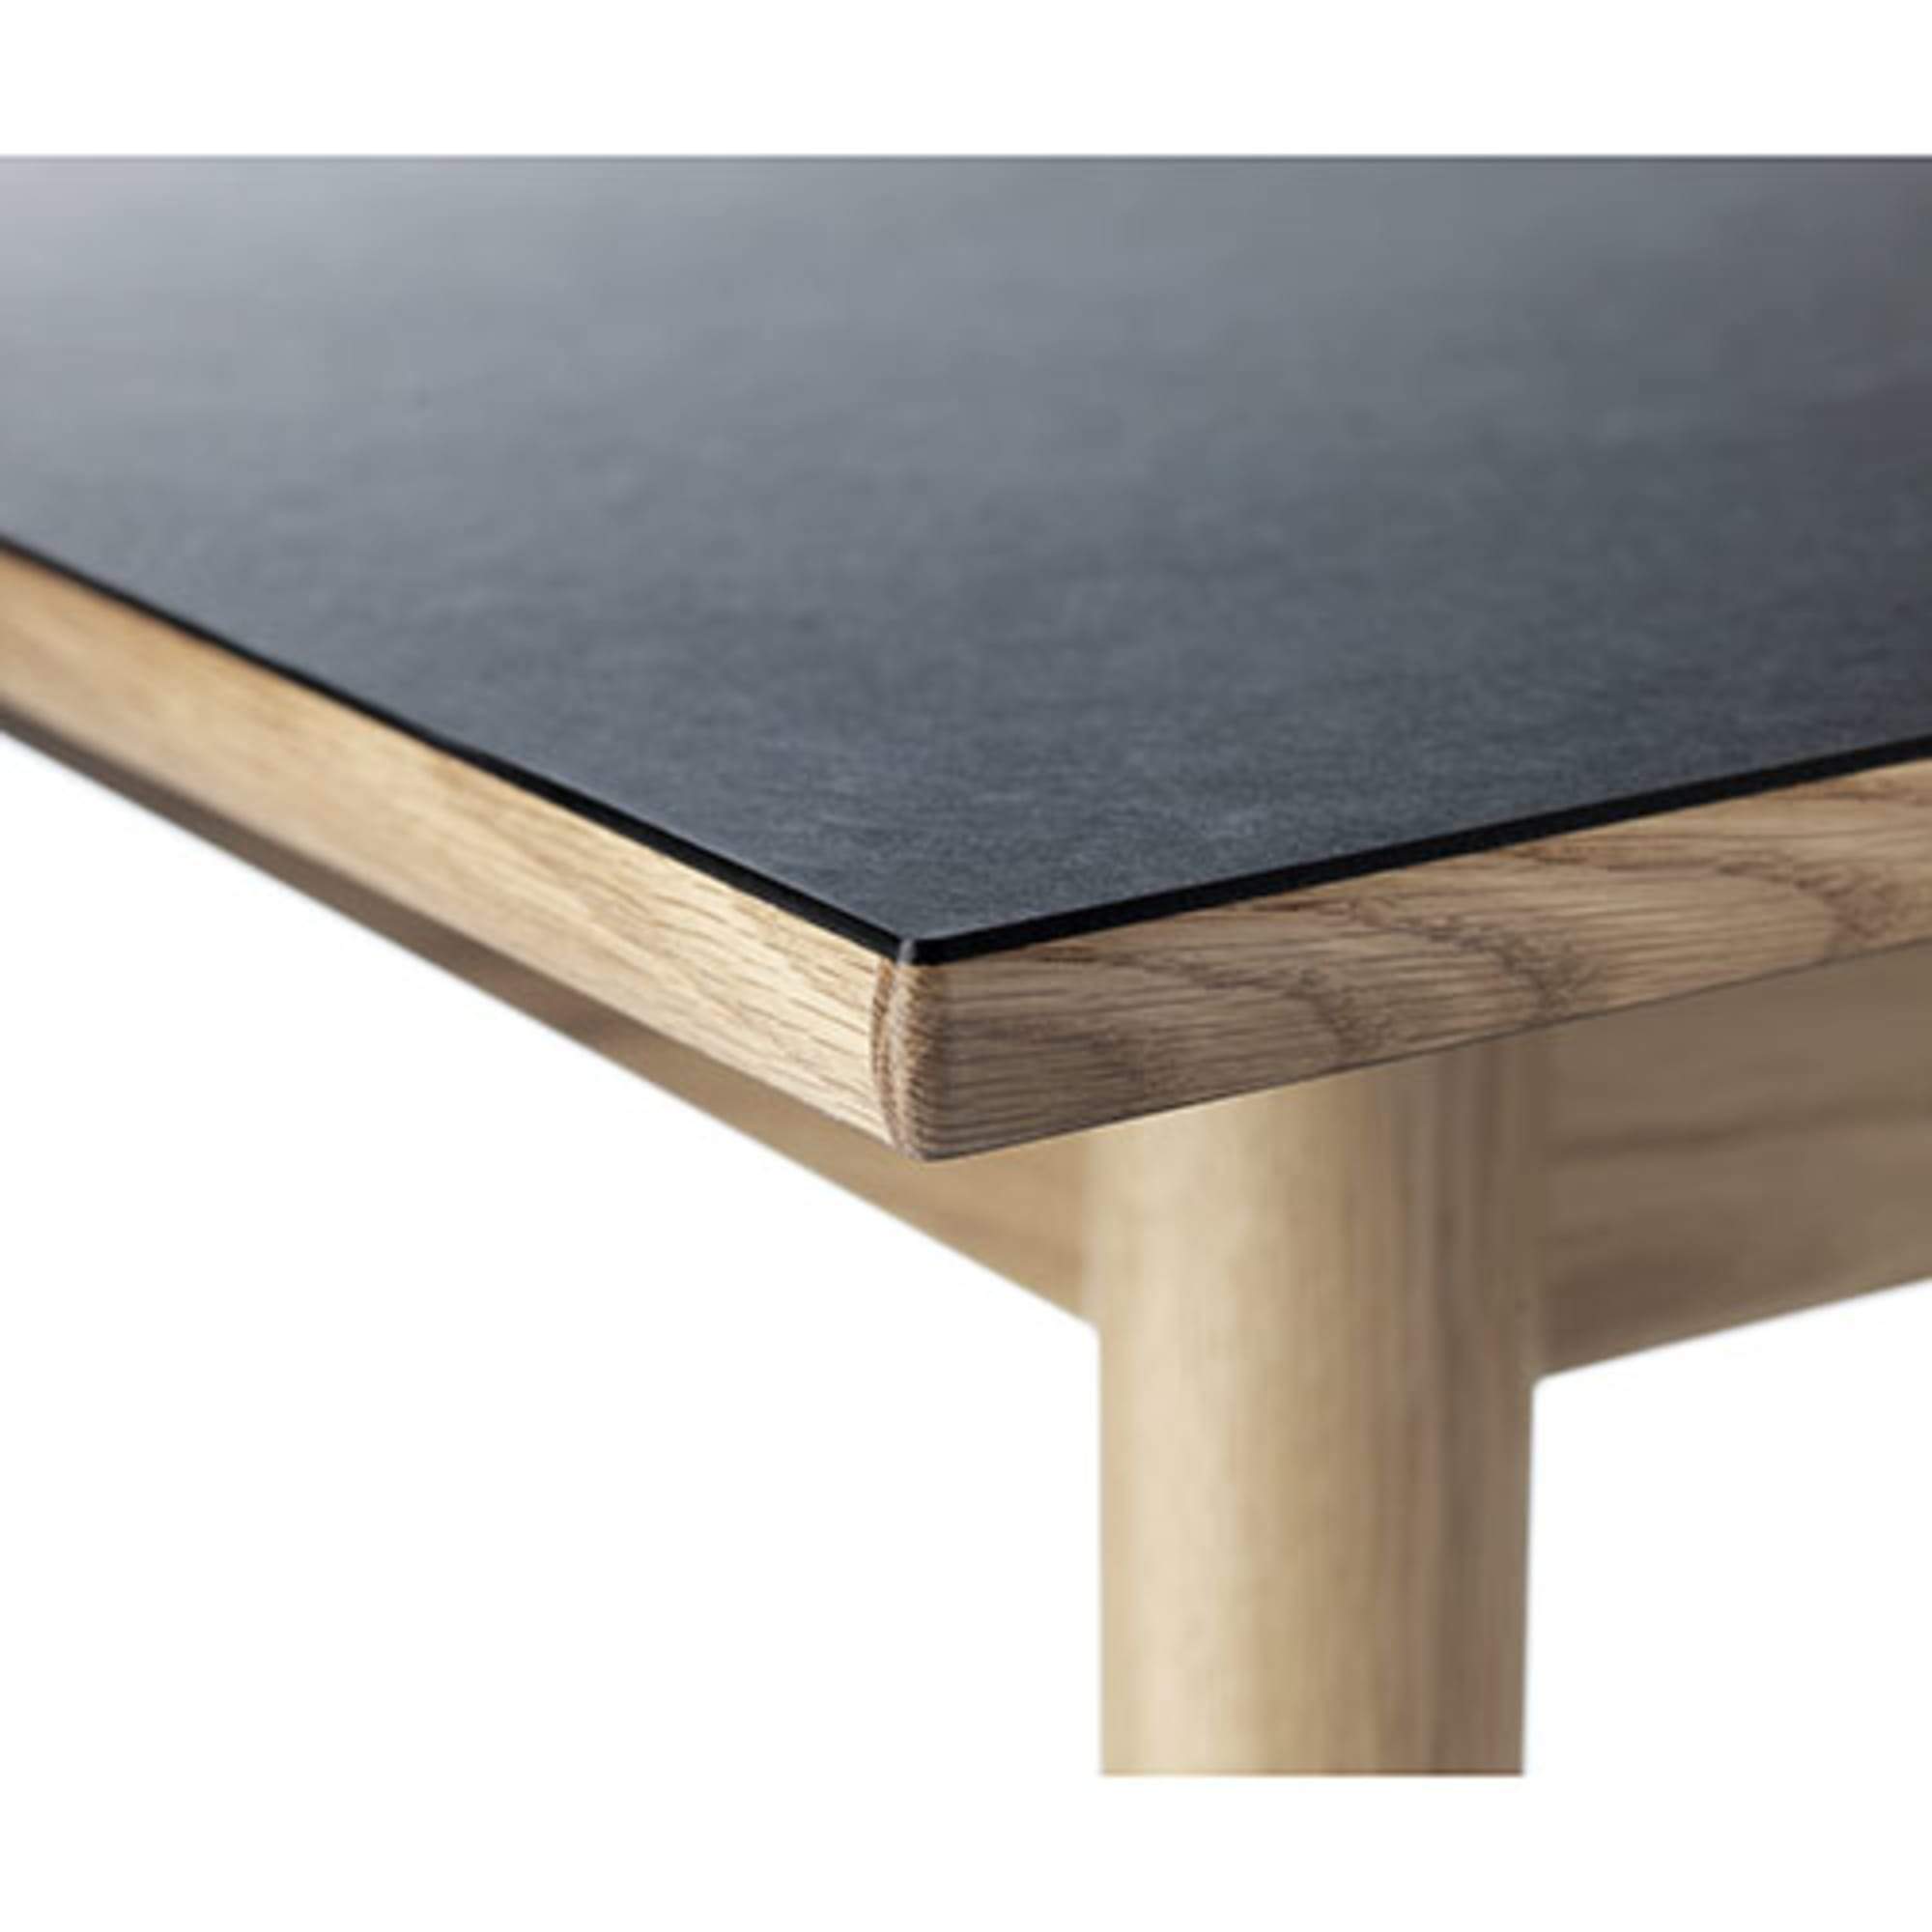 Fdb Møbler C35 C Dining Table For 8 Persons Oak, Black Linoleum Top, 95x220cm